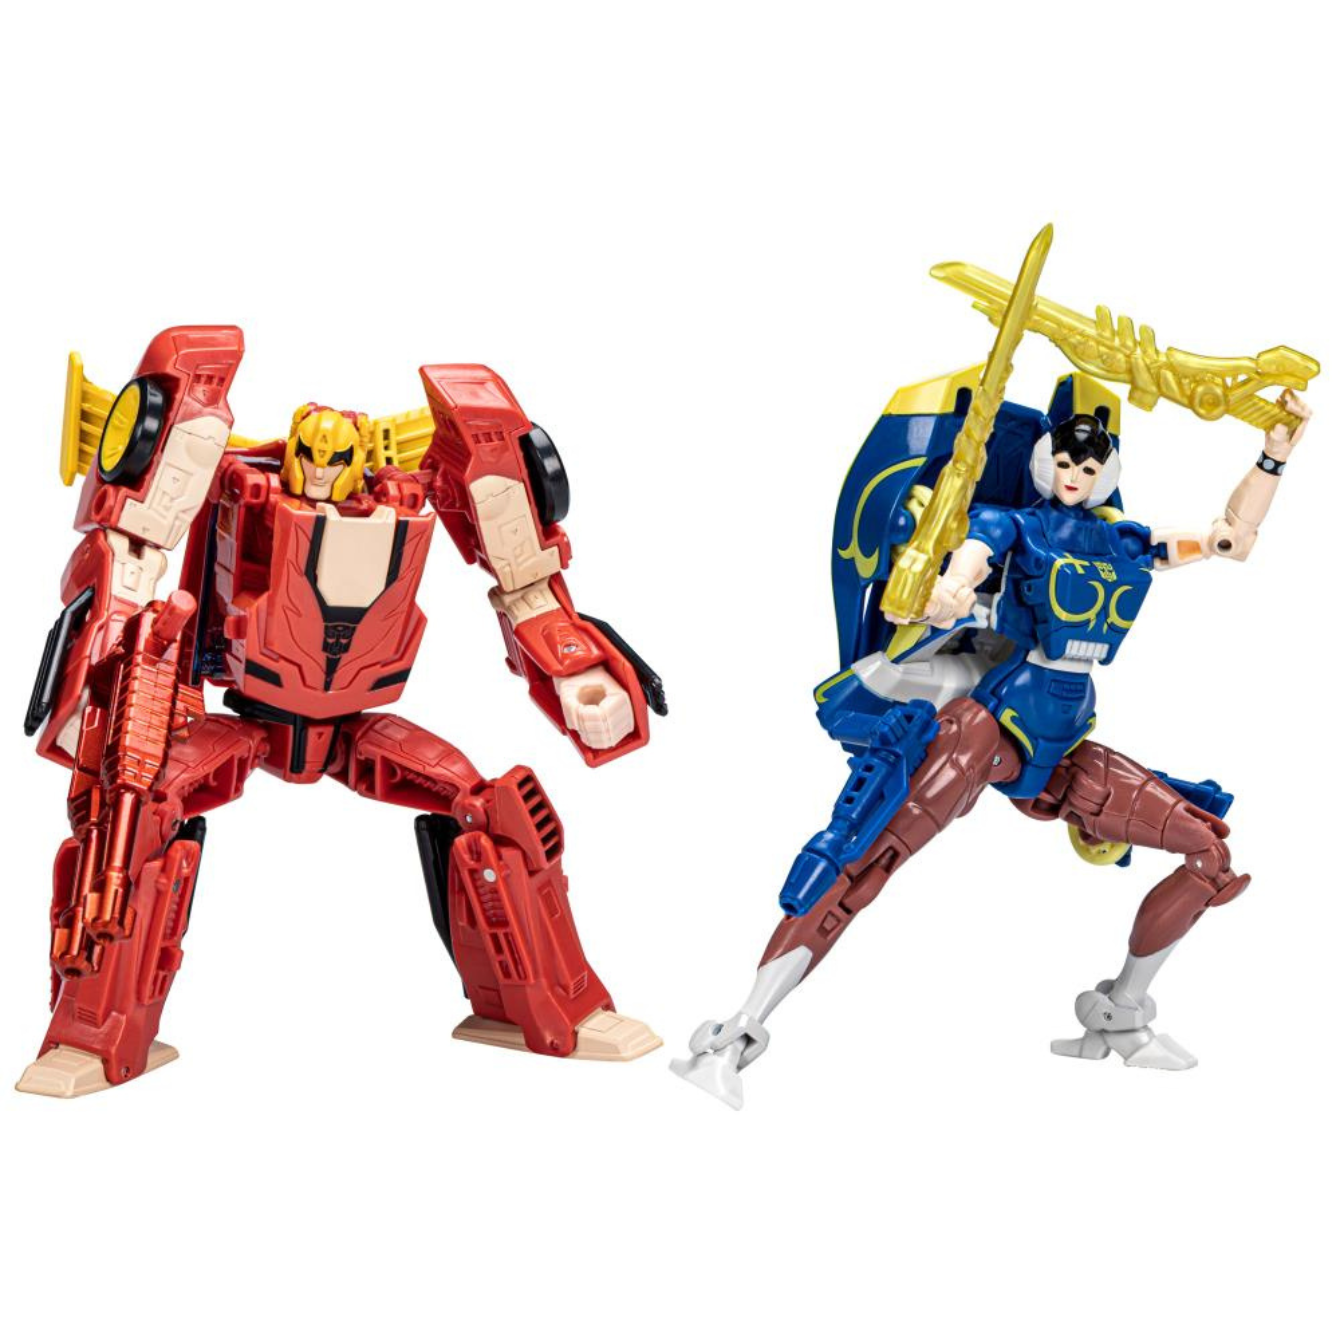 Transformers Collaborative: Street Fighter 2 Ken Hot Rod VS Arcee Chun-Li 2 pack